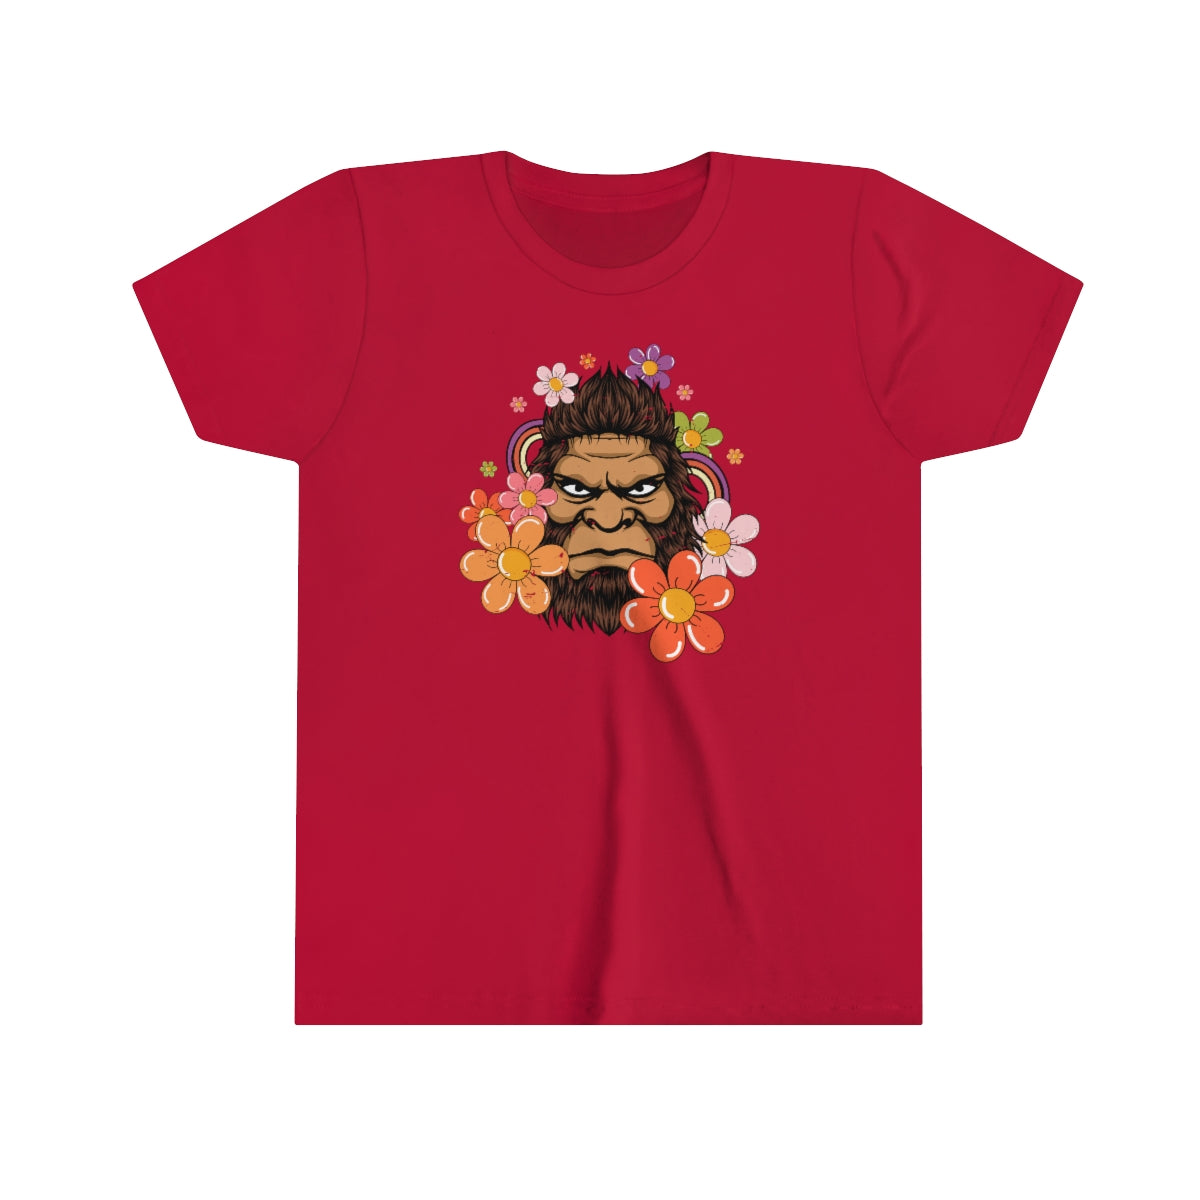 Retro 70s Floral Bigfoot Shirt | Funny Flower Power Shirt | Youth Jersey T-shirt